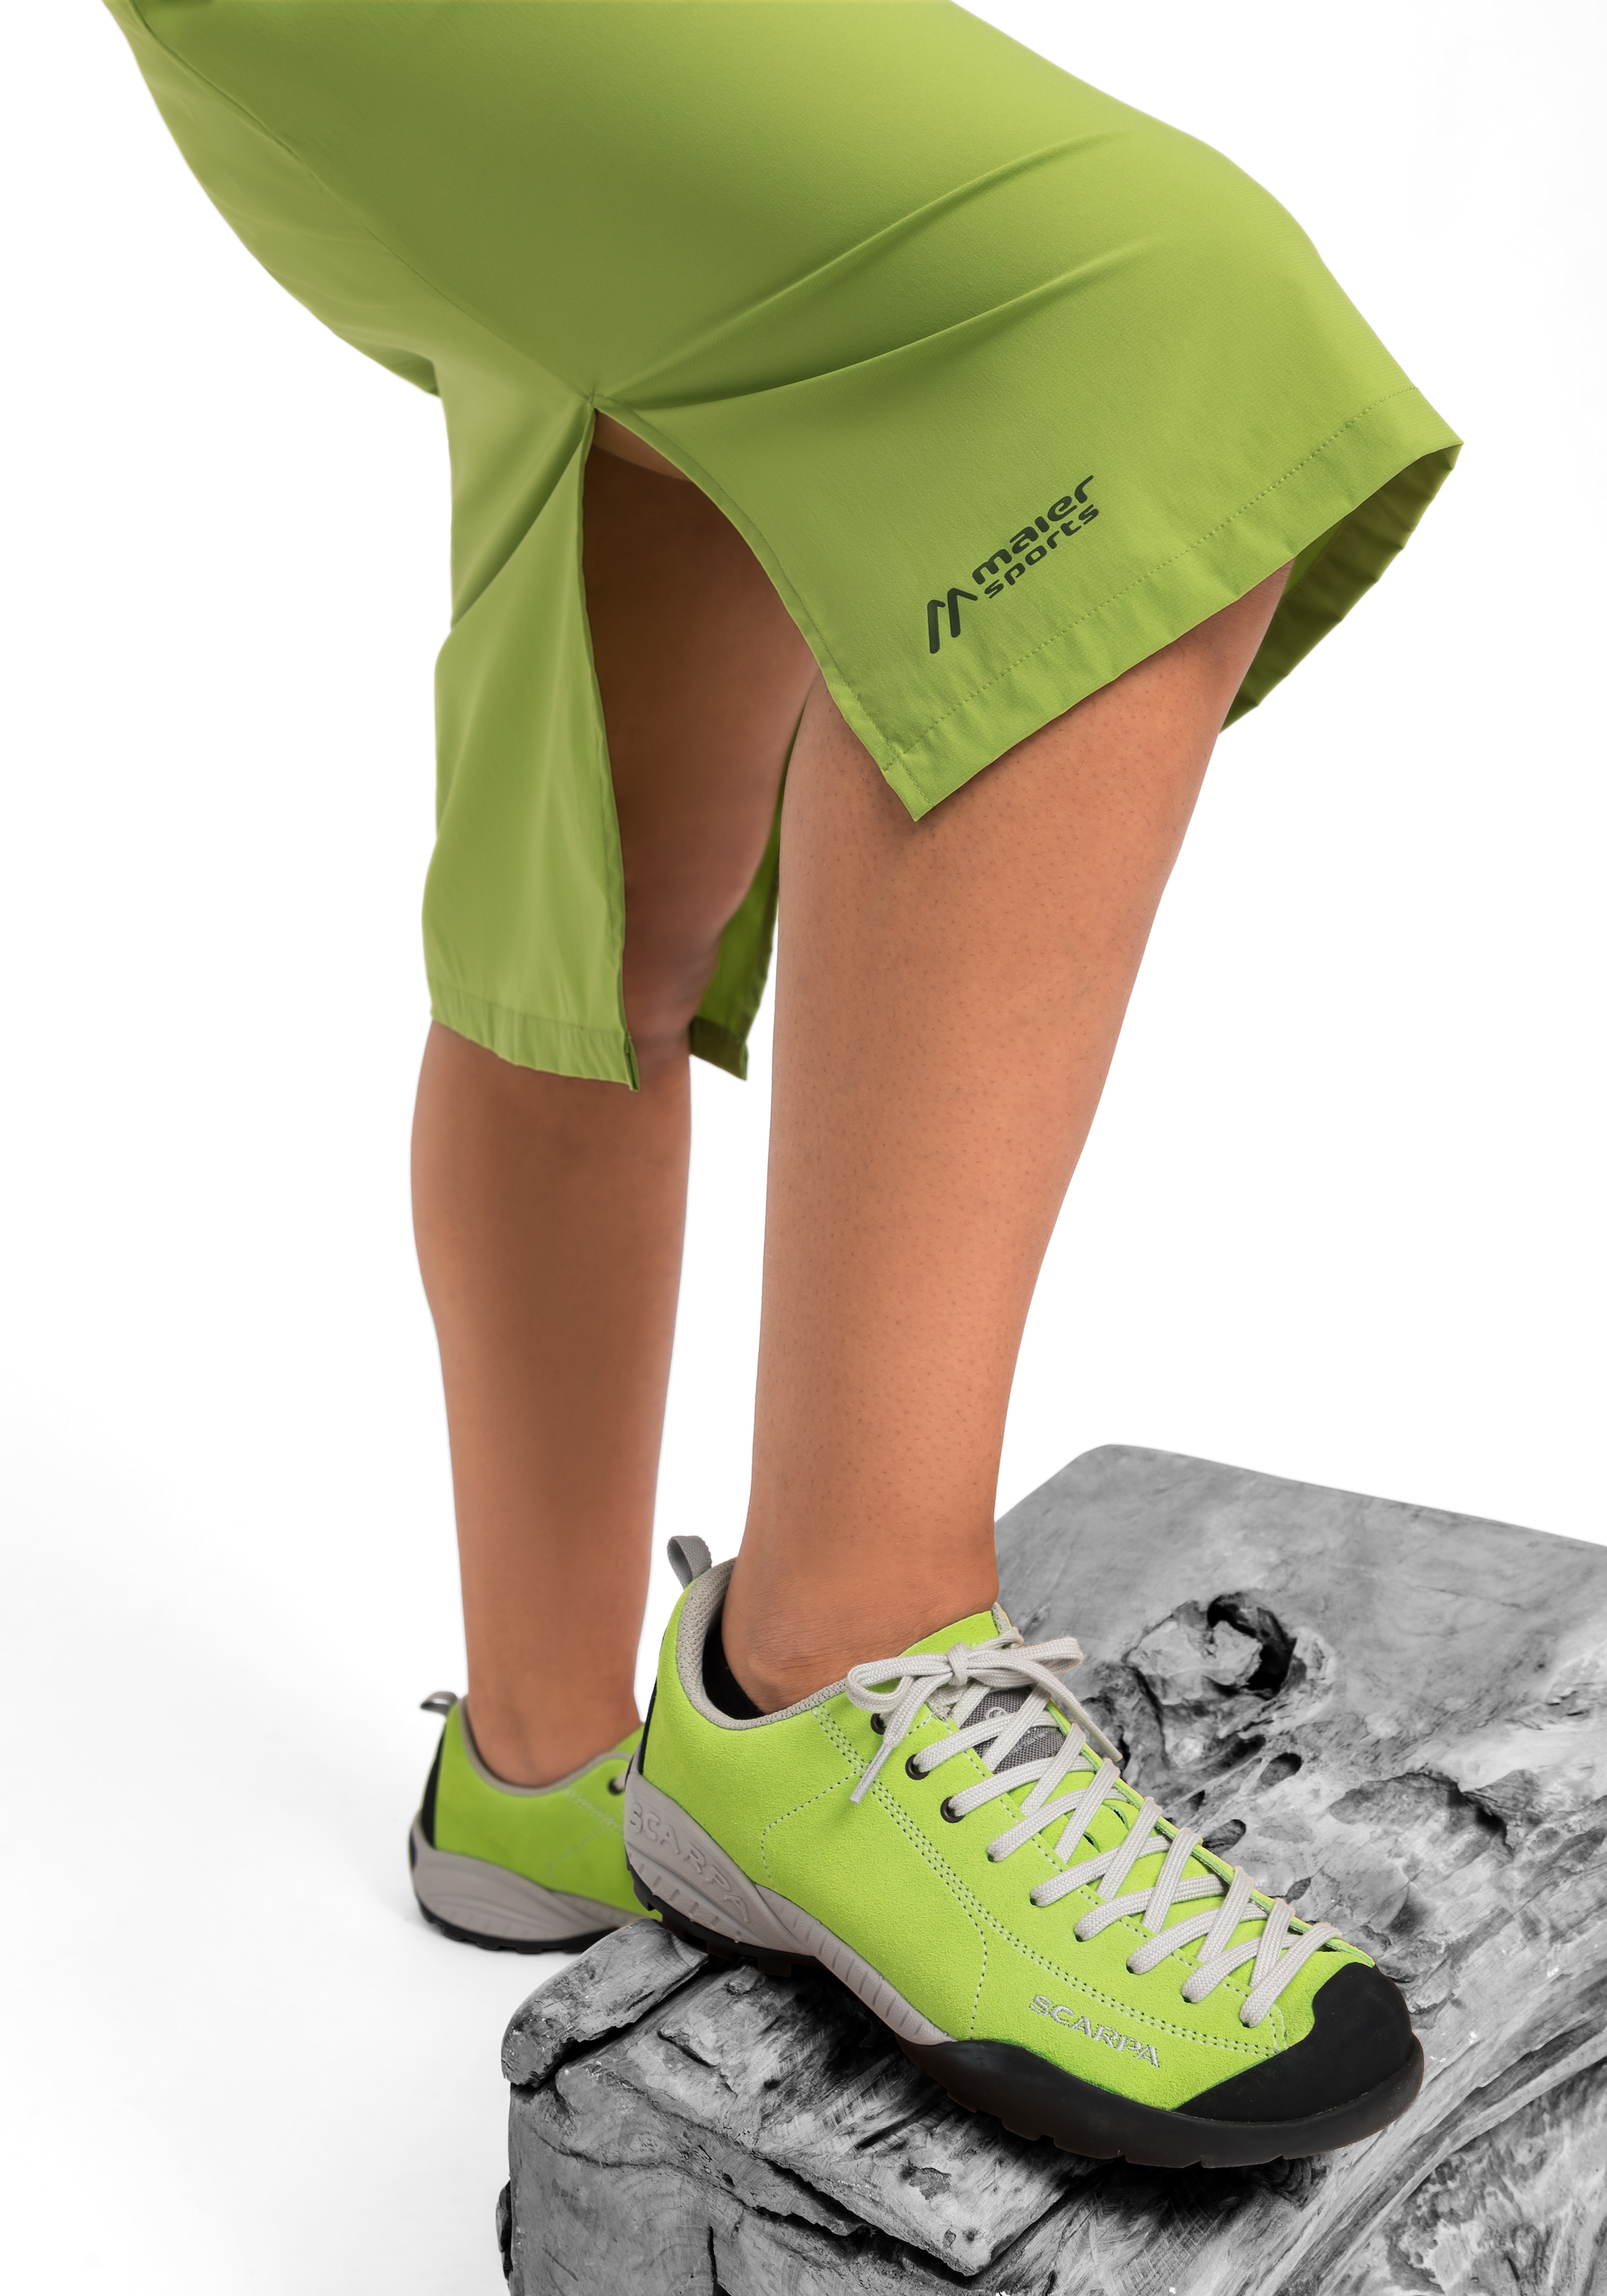 Skirt« Entdecke »Fortunit Sommerrock auf Sports Maier